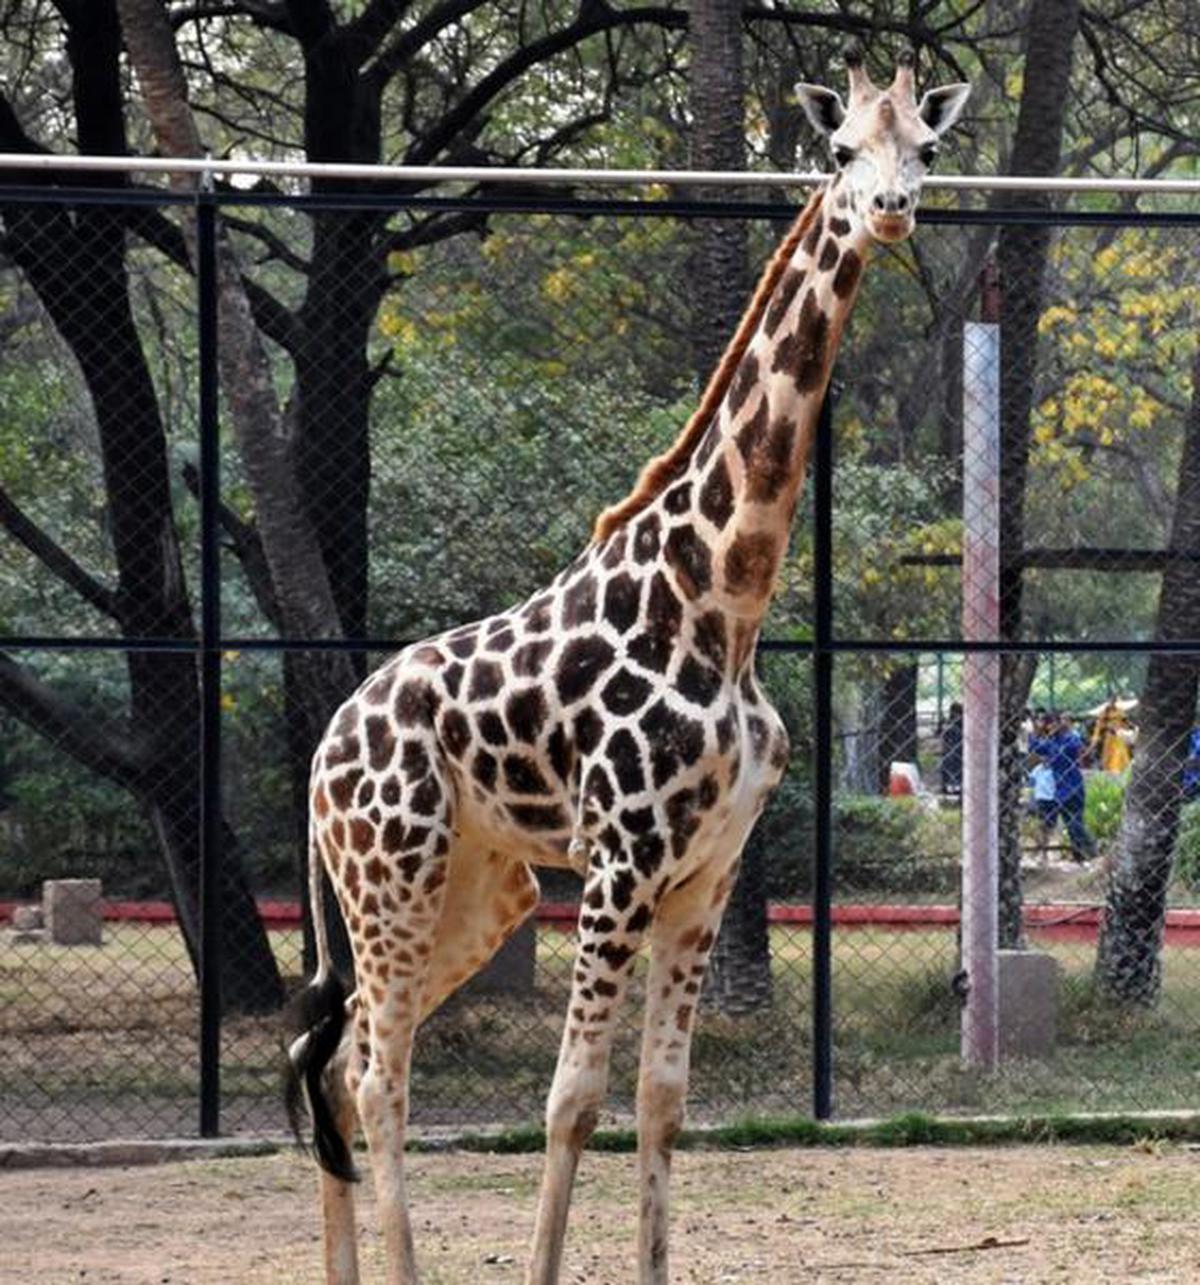 Young giraffe in Nehru Zoo dies of pneumonia - The Hindu